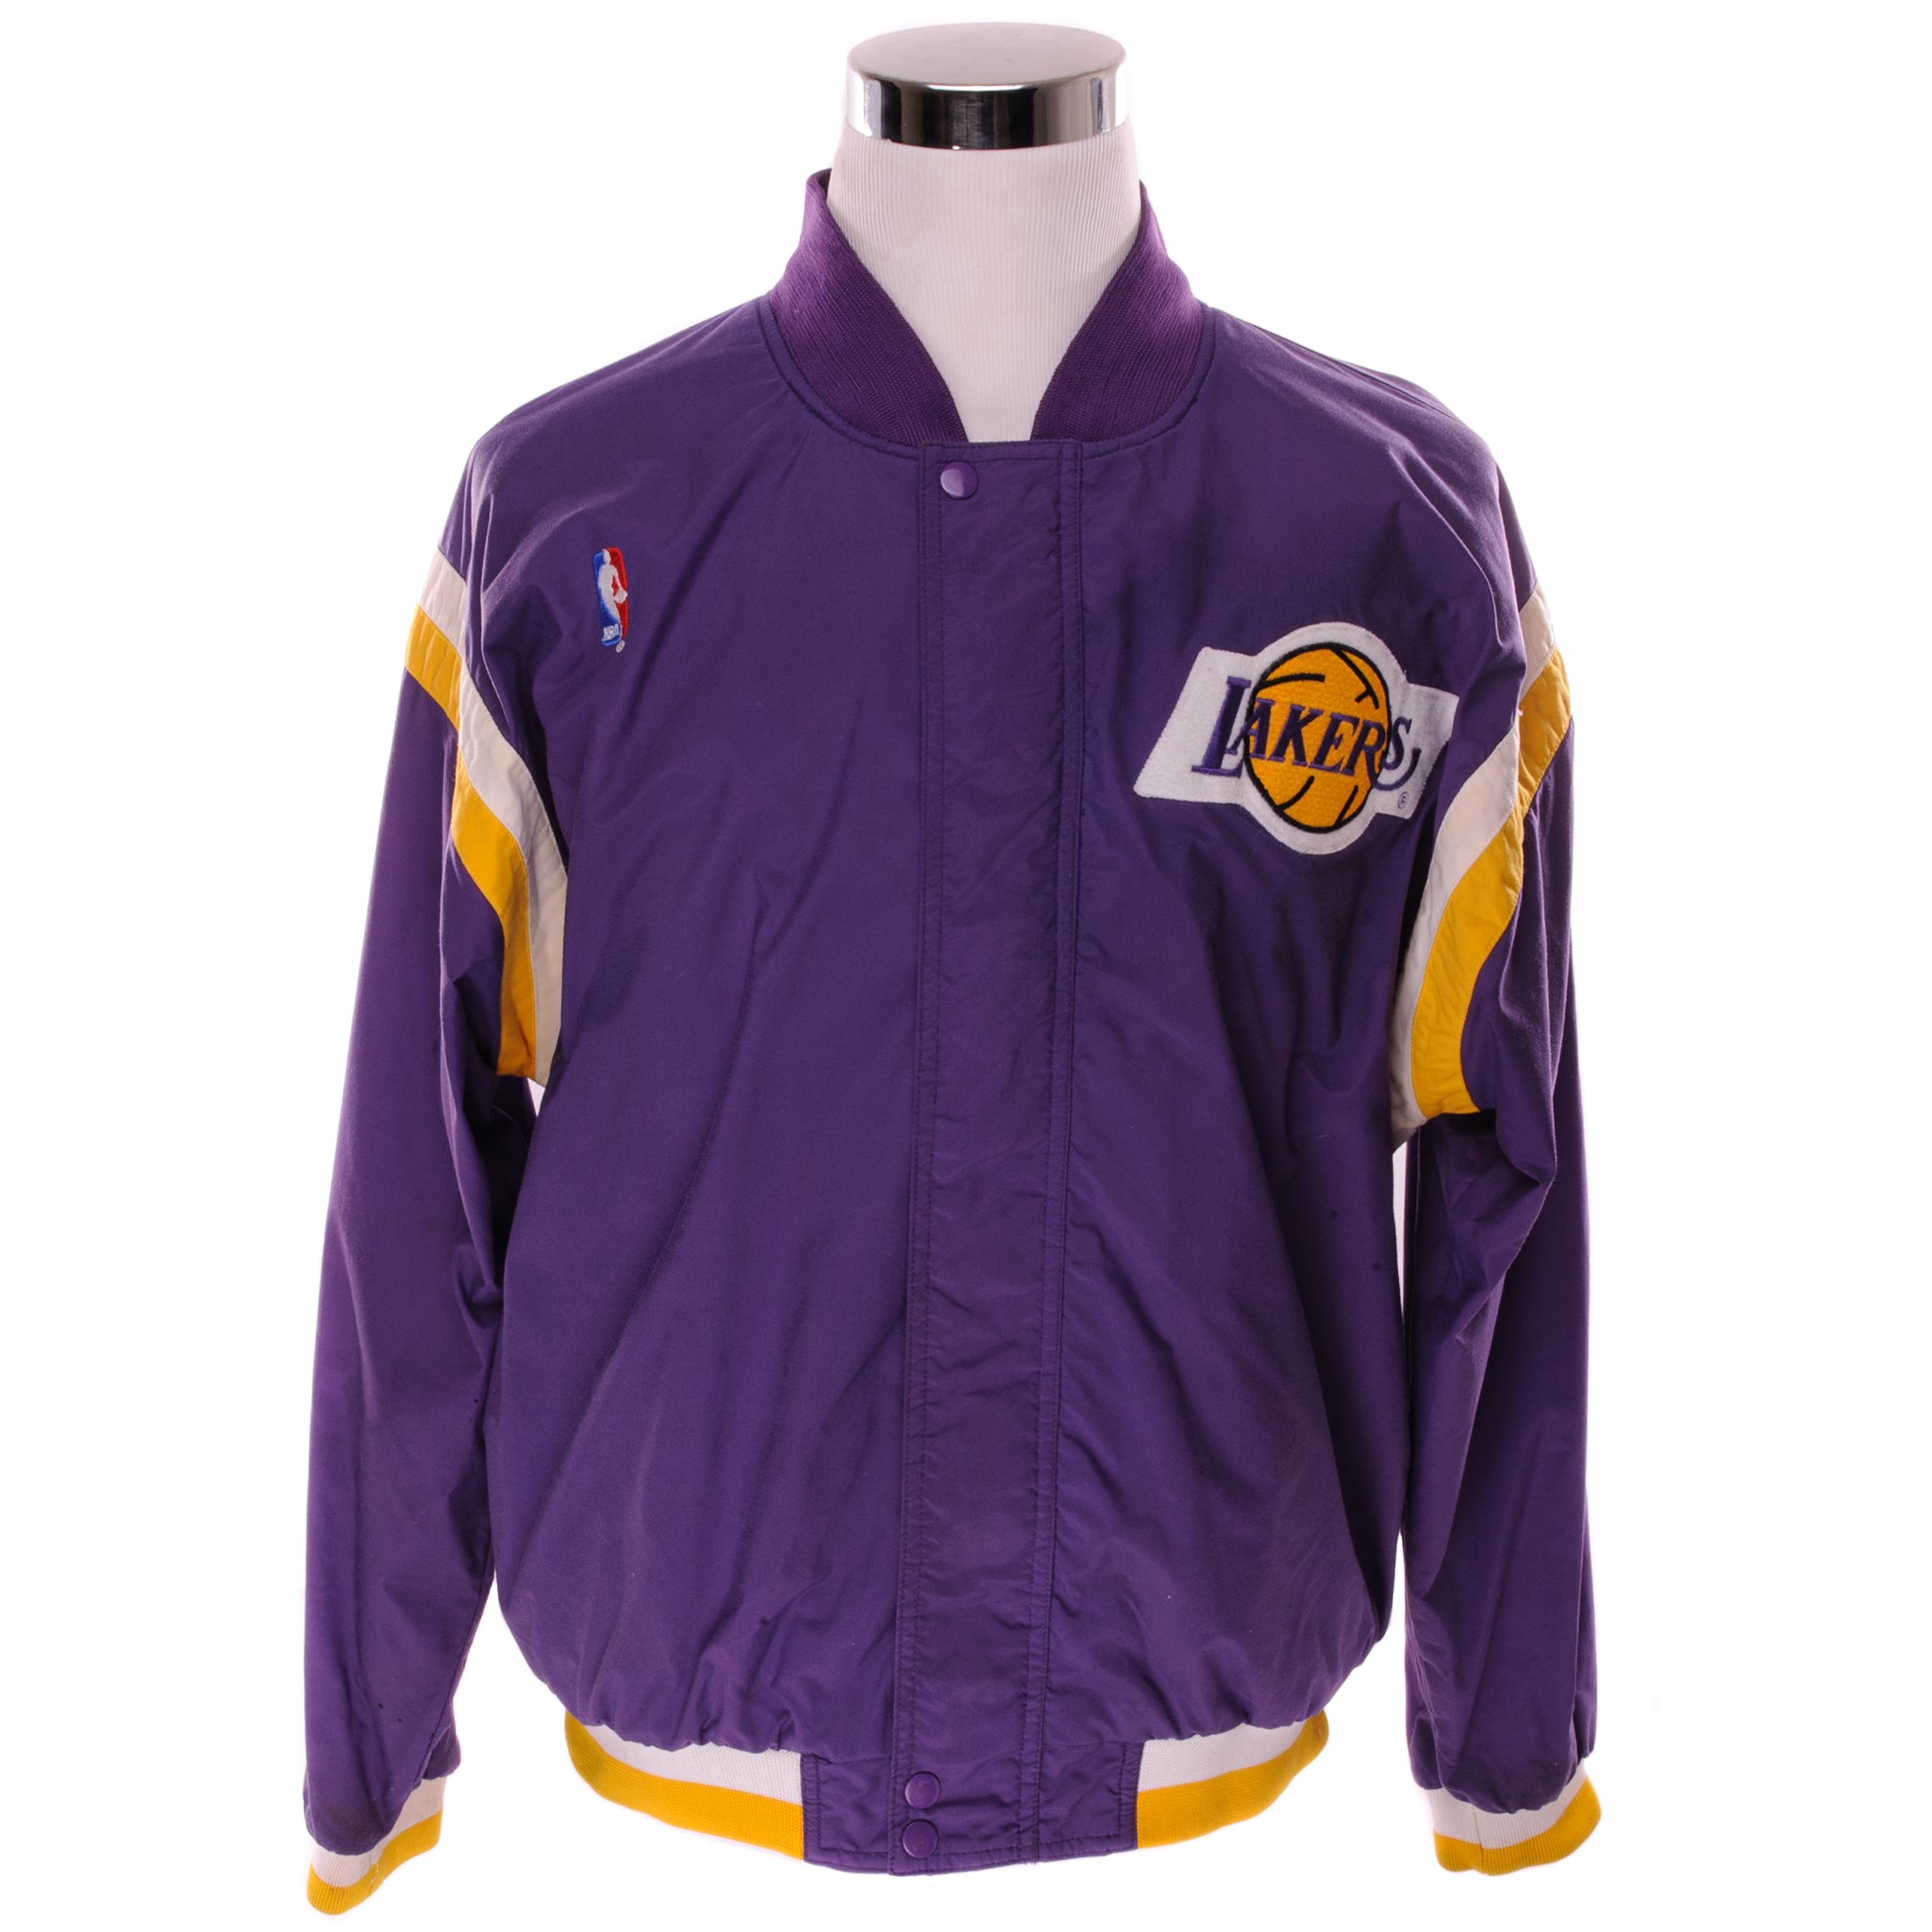 adidas, Jackets & Coats, Adidas Lakers Track Jacket